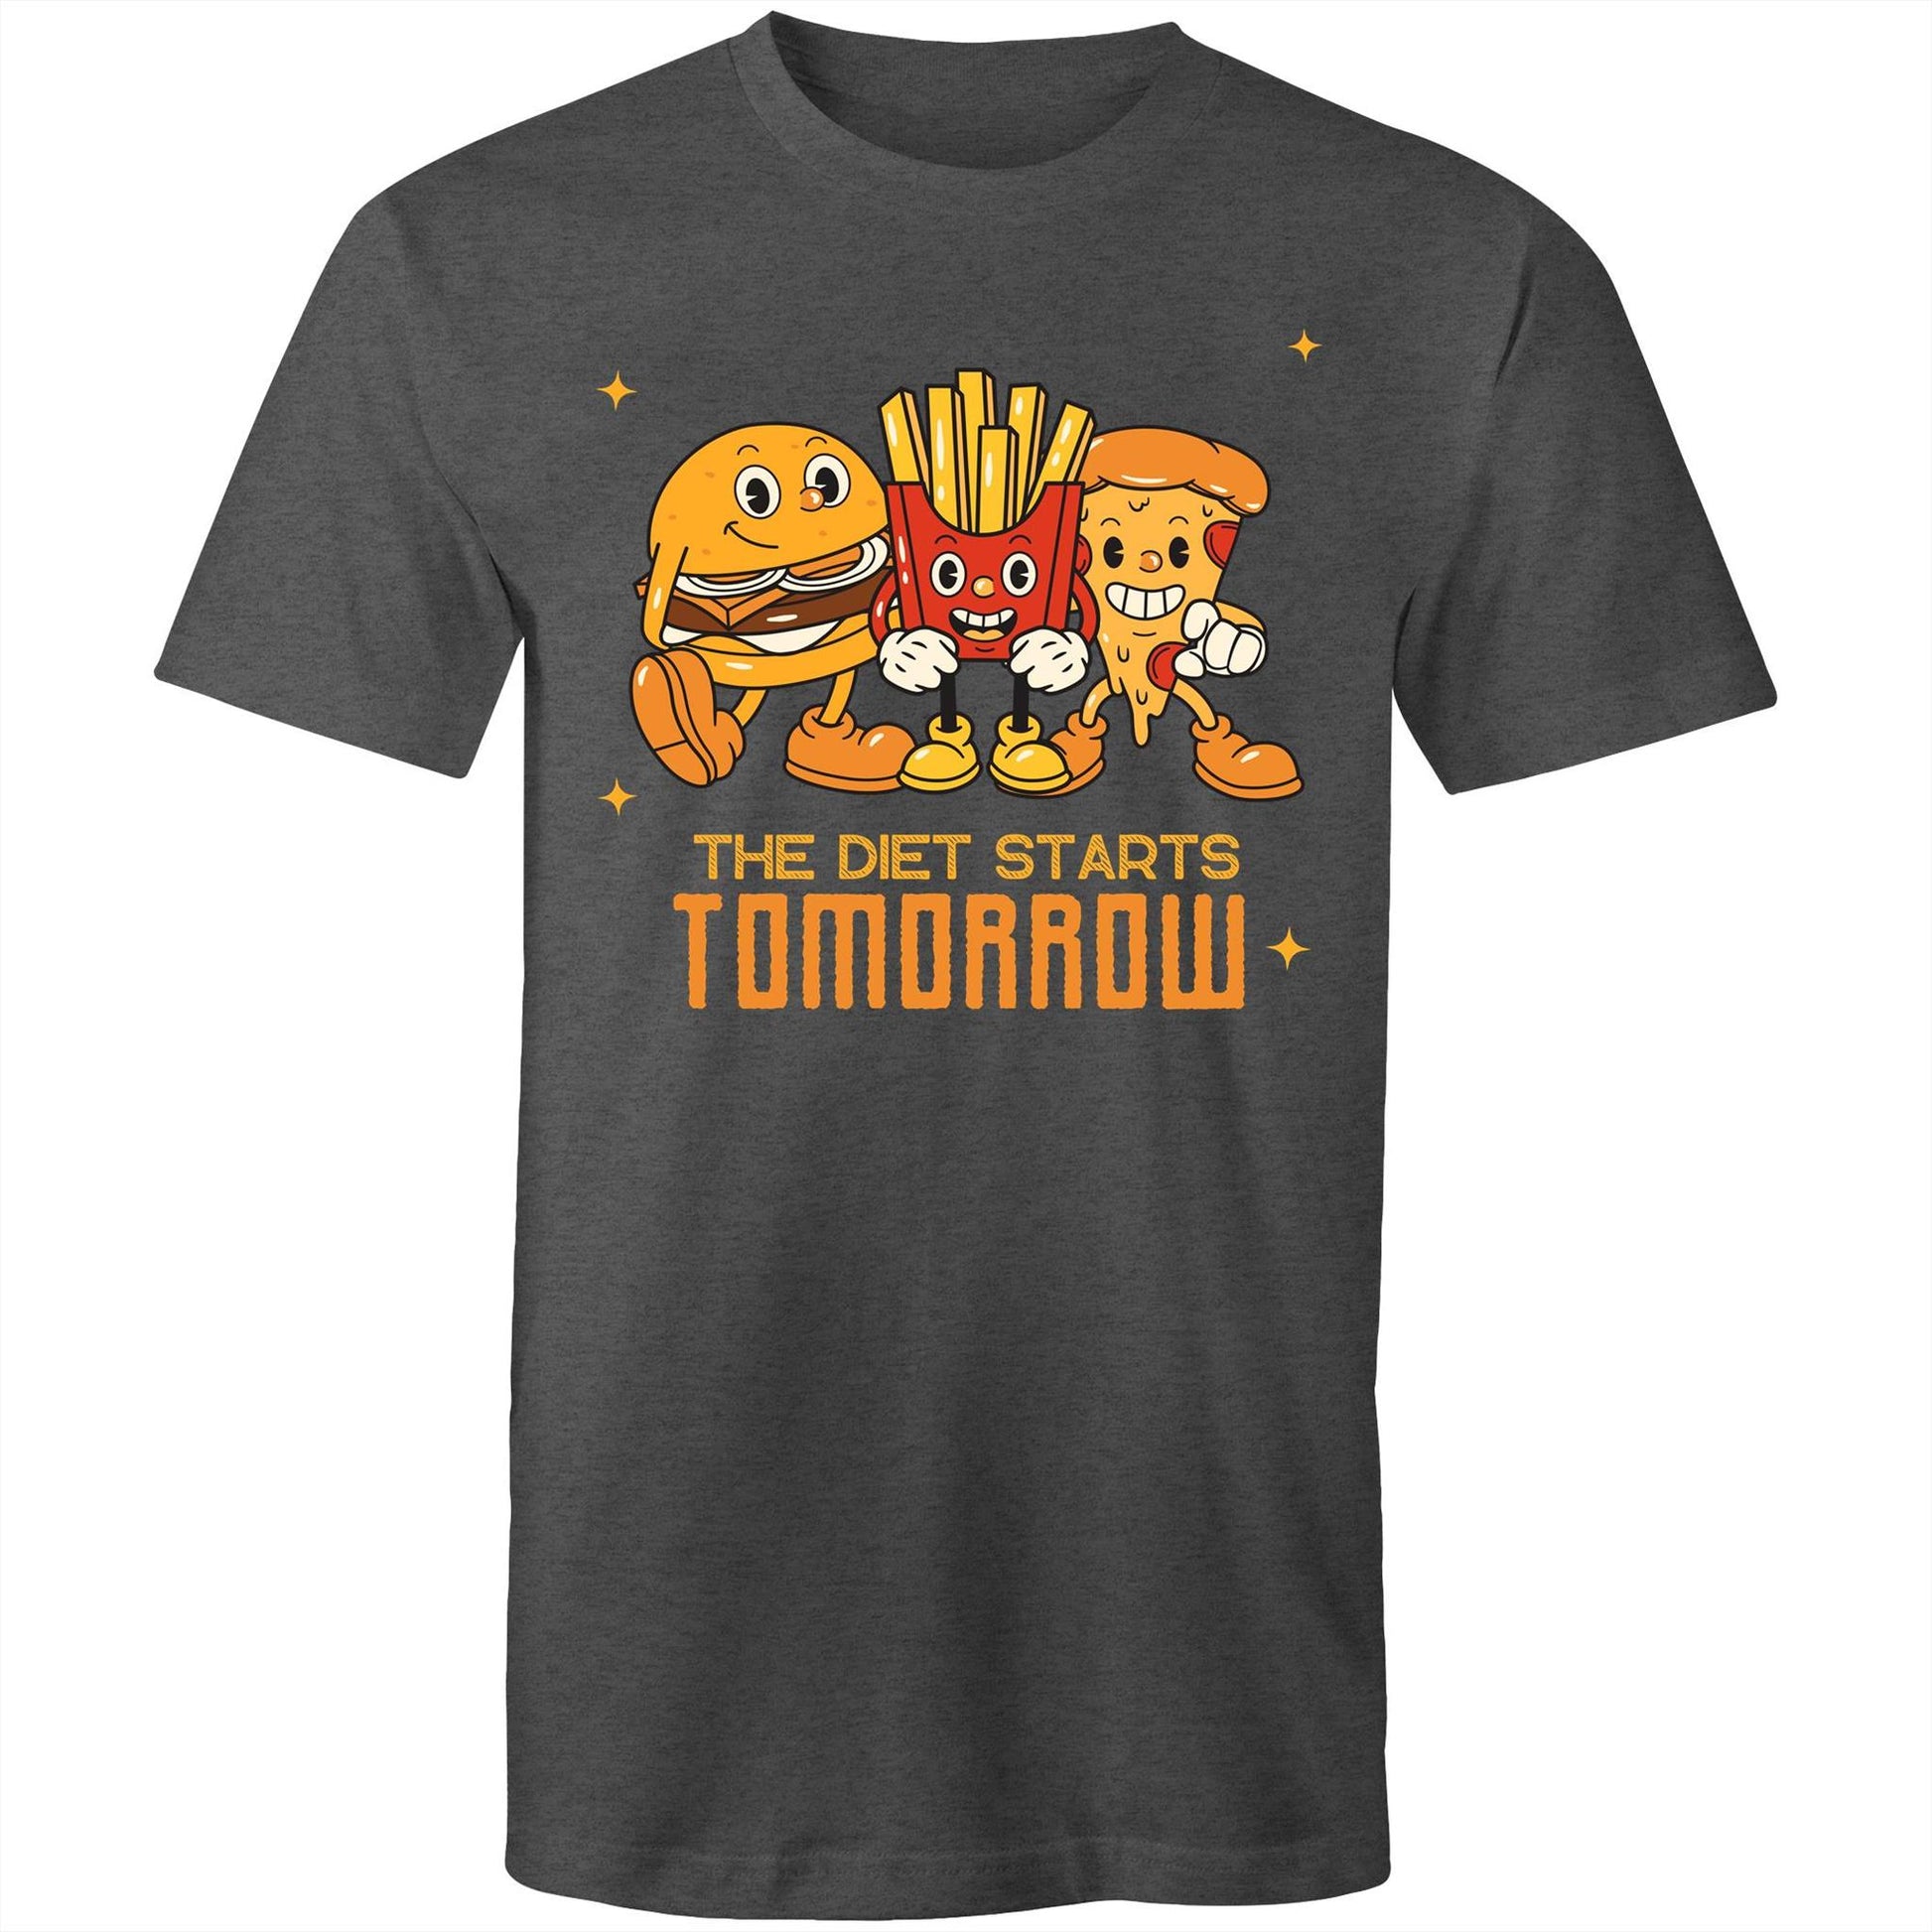 The Diet Starts Tomorrow, Hamburger, Pizza, Fries - Mens T-Shirt Asphalt Marle Mens T-shirt Food Funny Retro